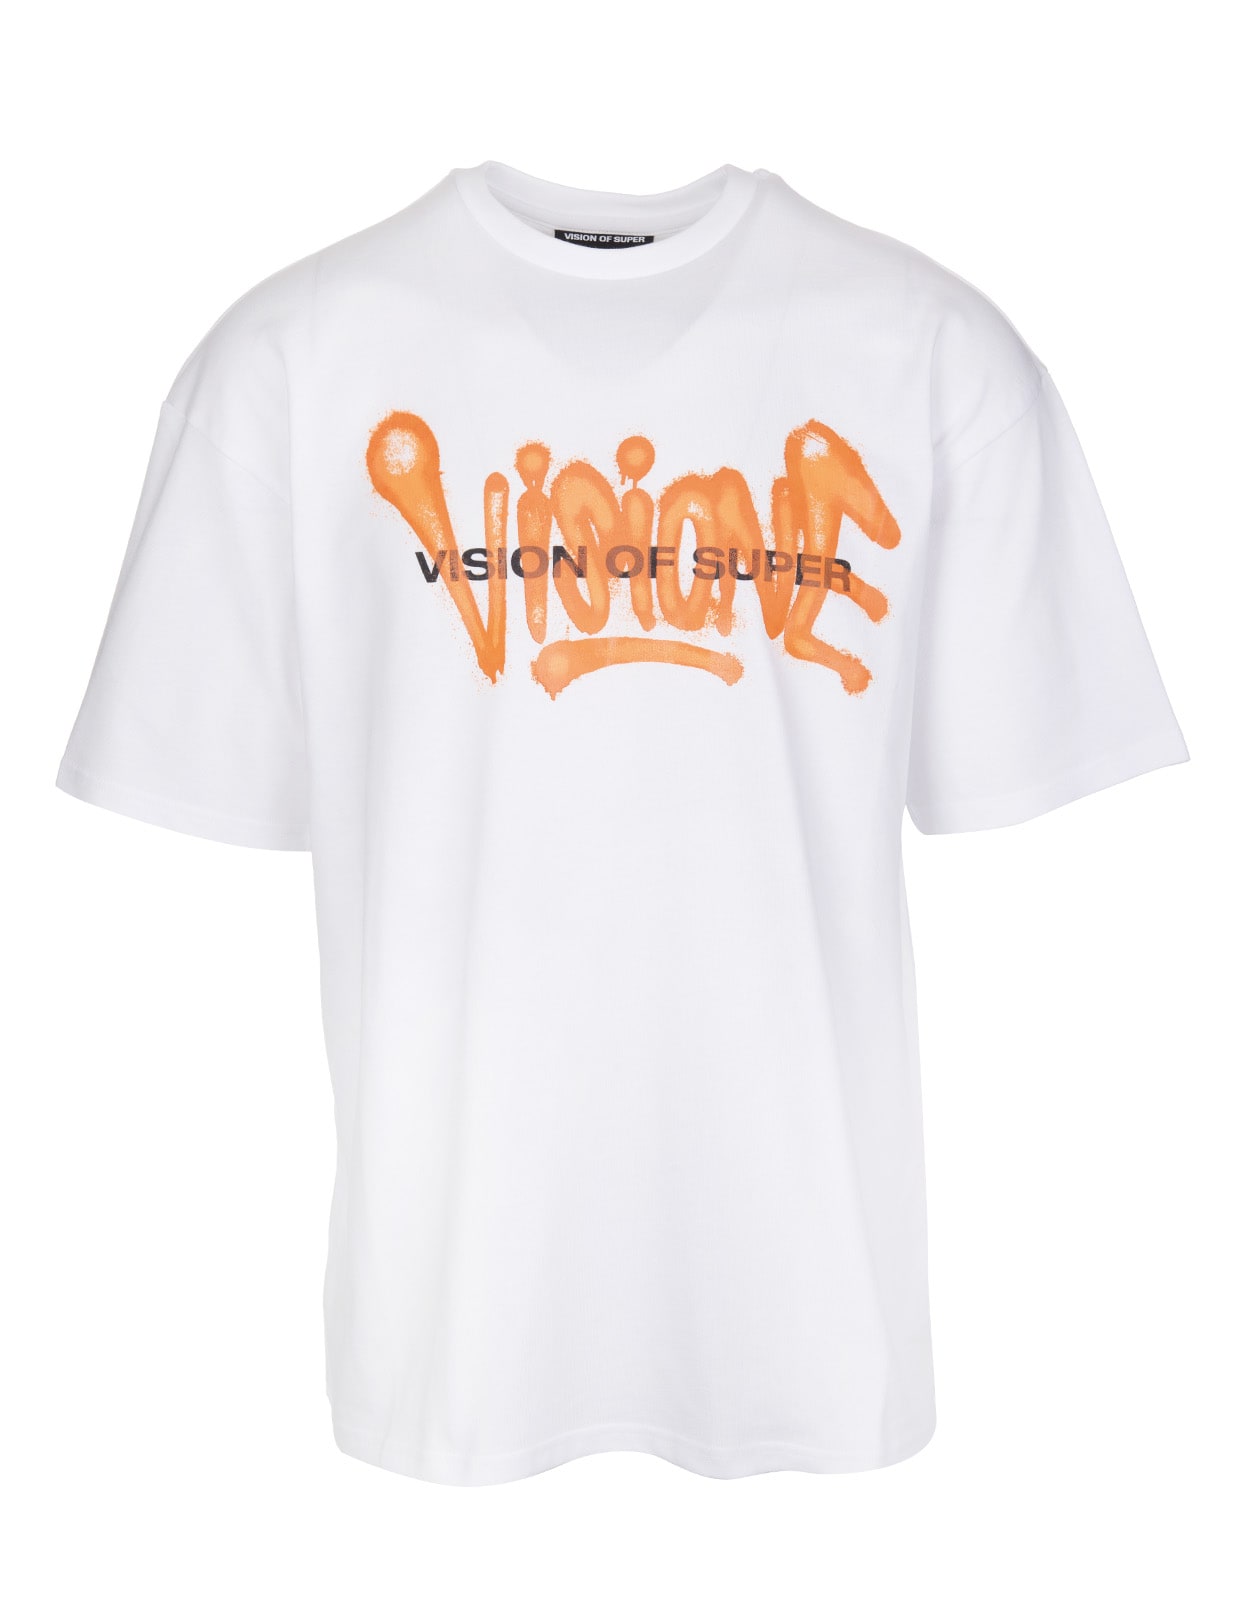 Vision of Super White And Orange visione Man T-shirt